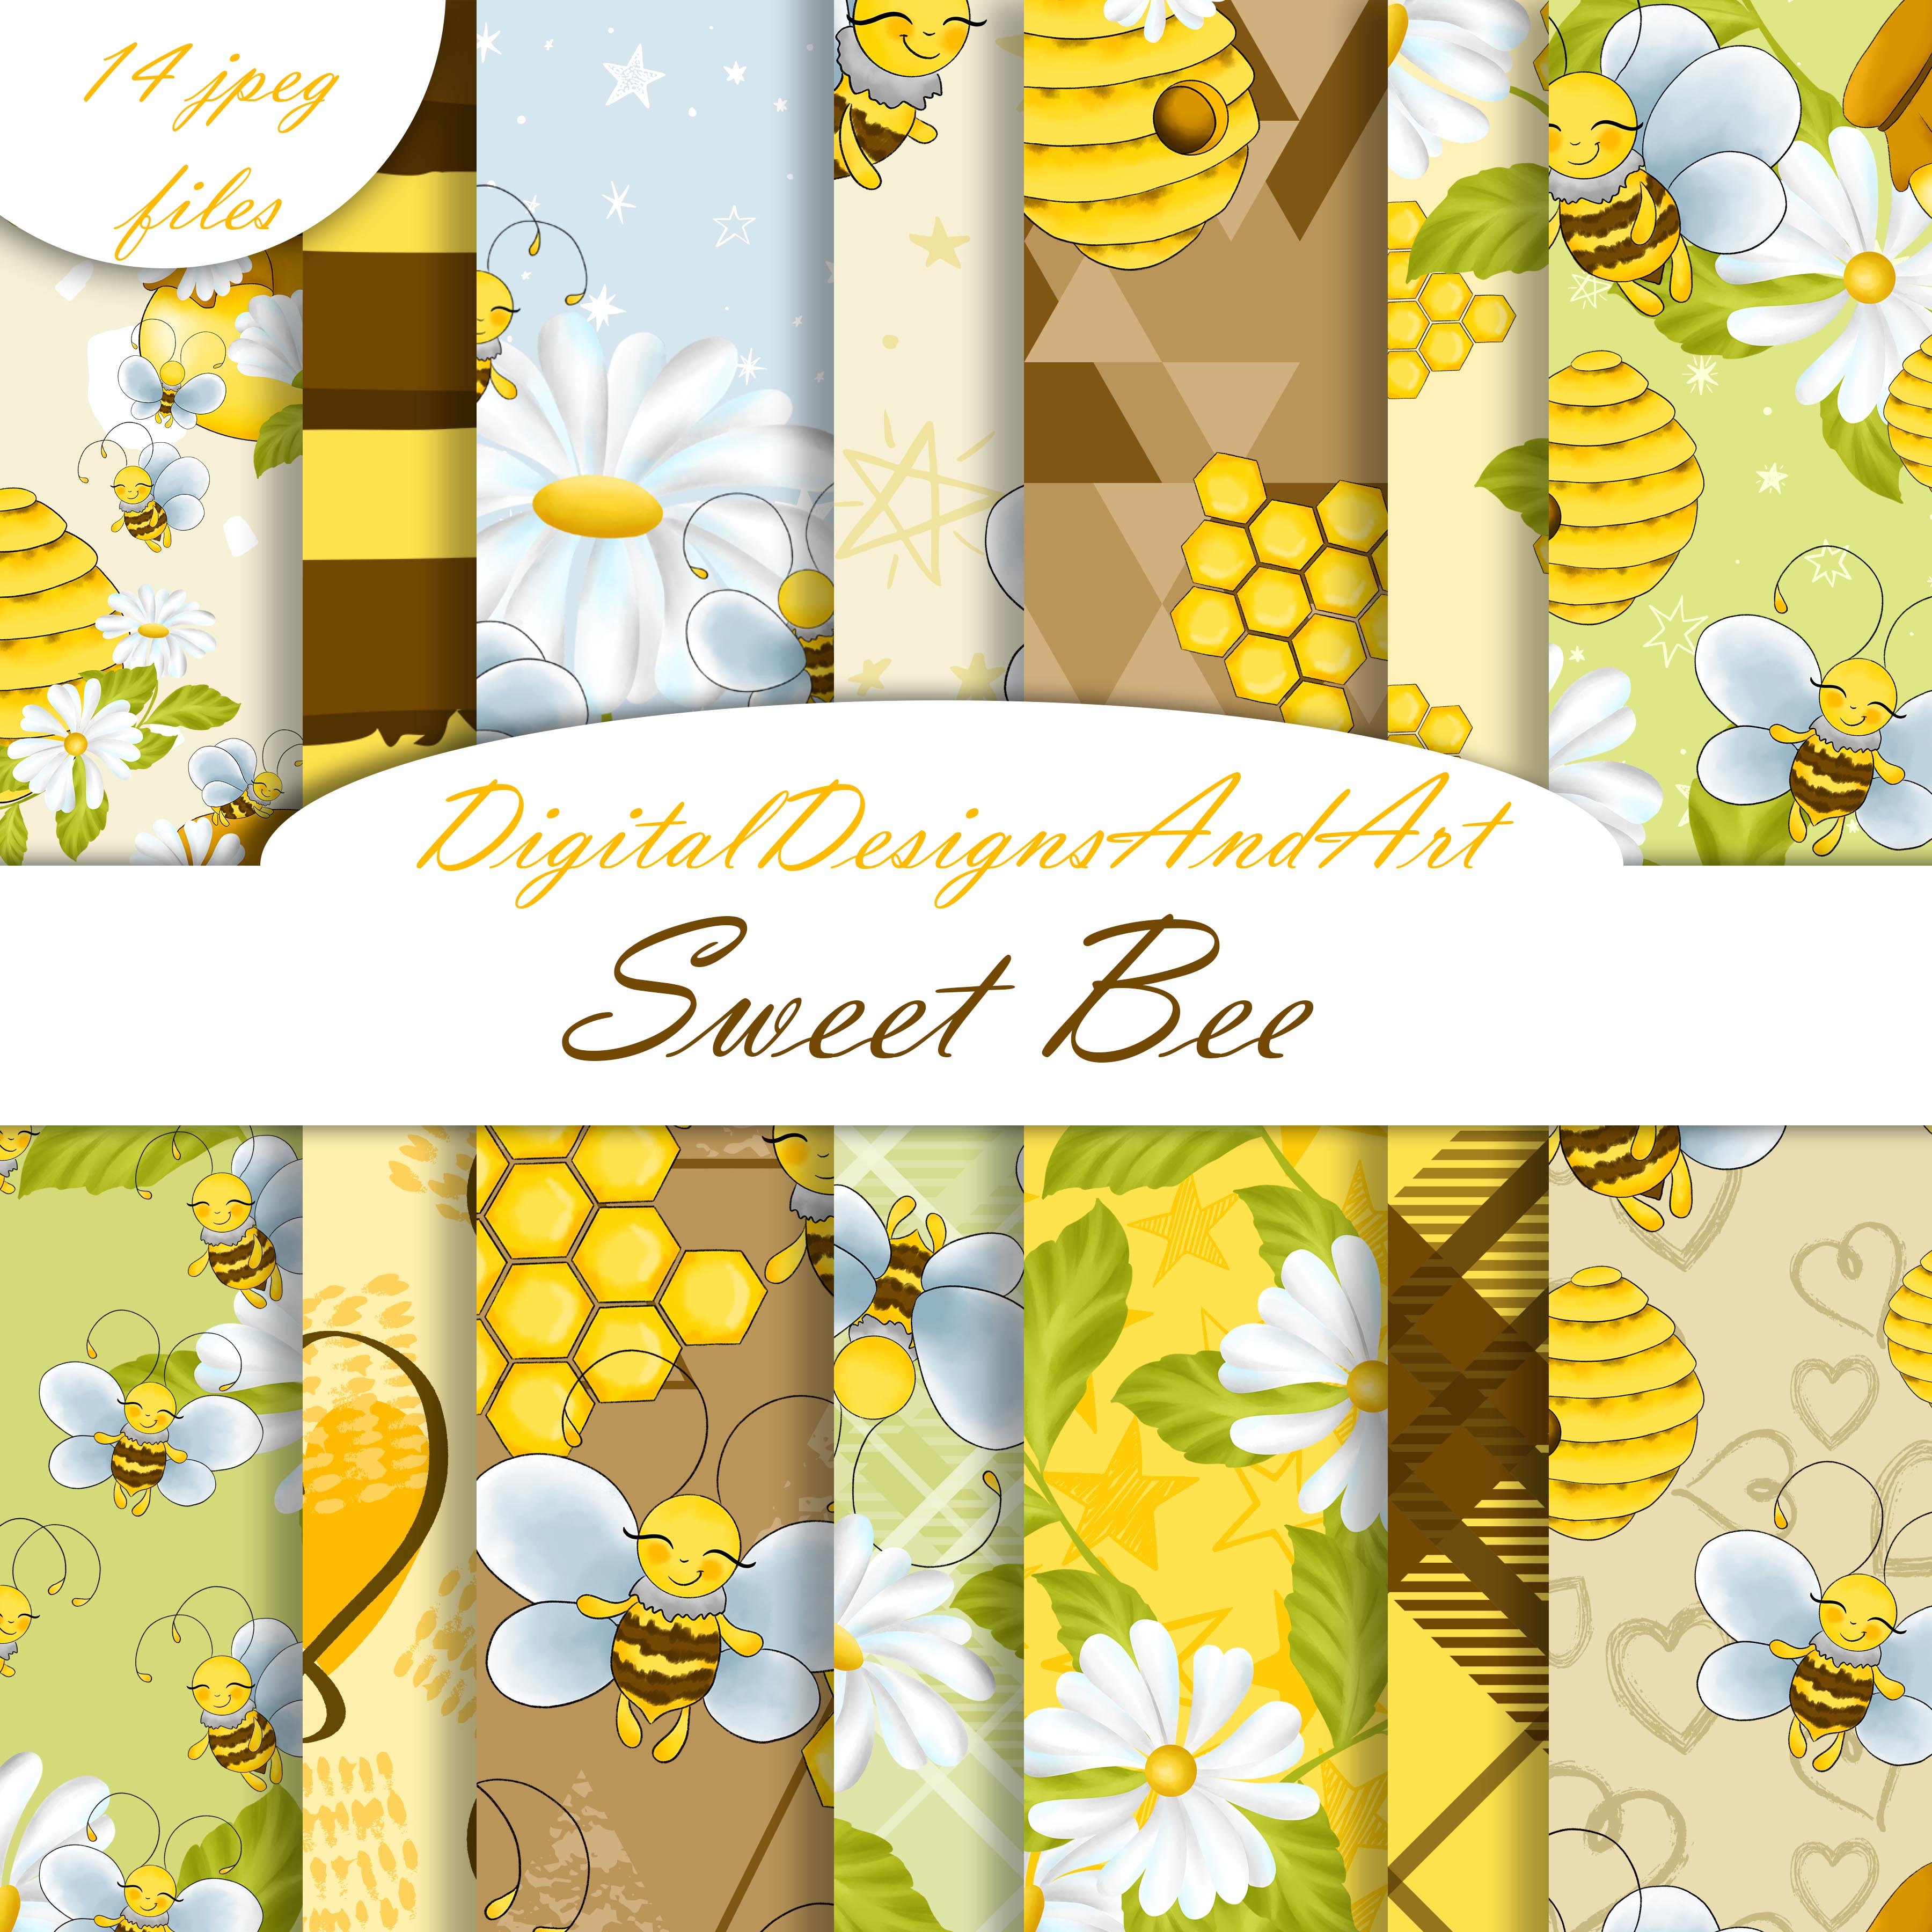 Sweet bee digital paper cover image.